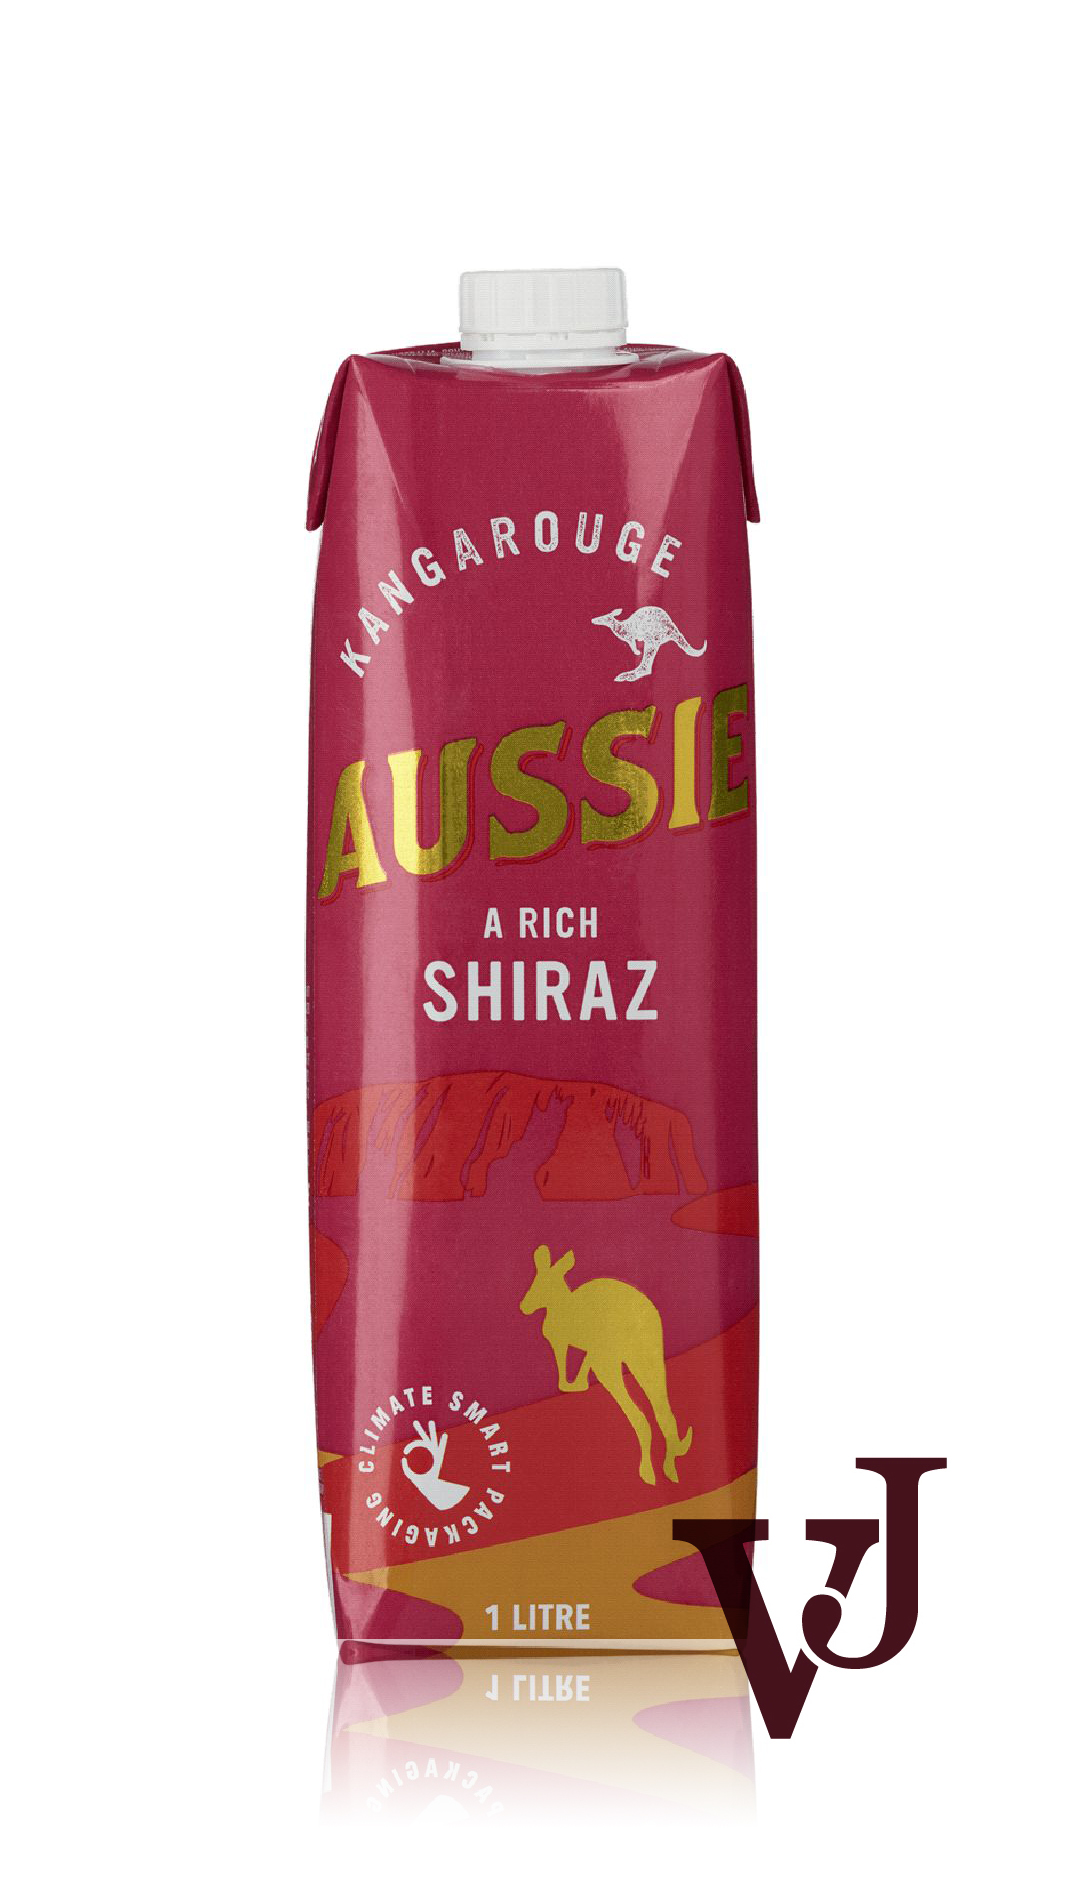 Rött Vin - AUSSIE Kangarouge Shiraz artikel nummer 645101 från producenten Altia från området Australien - Vinjournalen.se